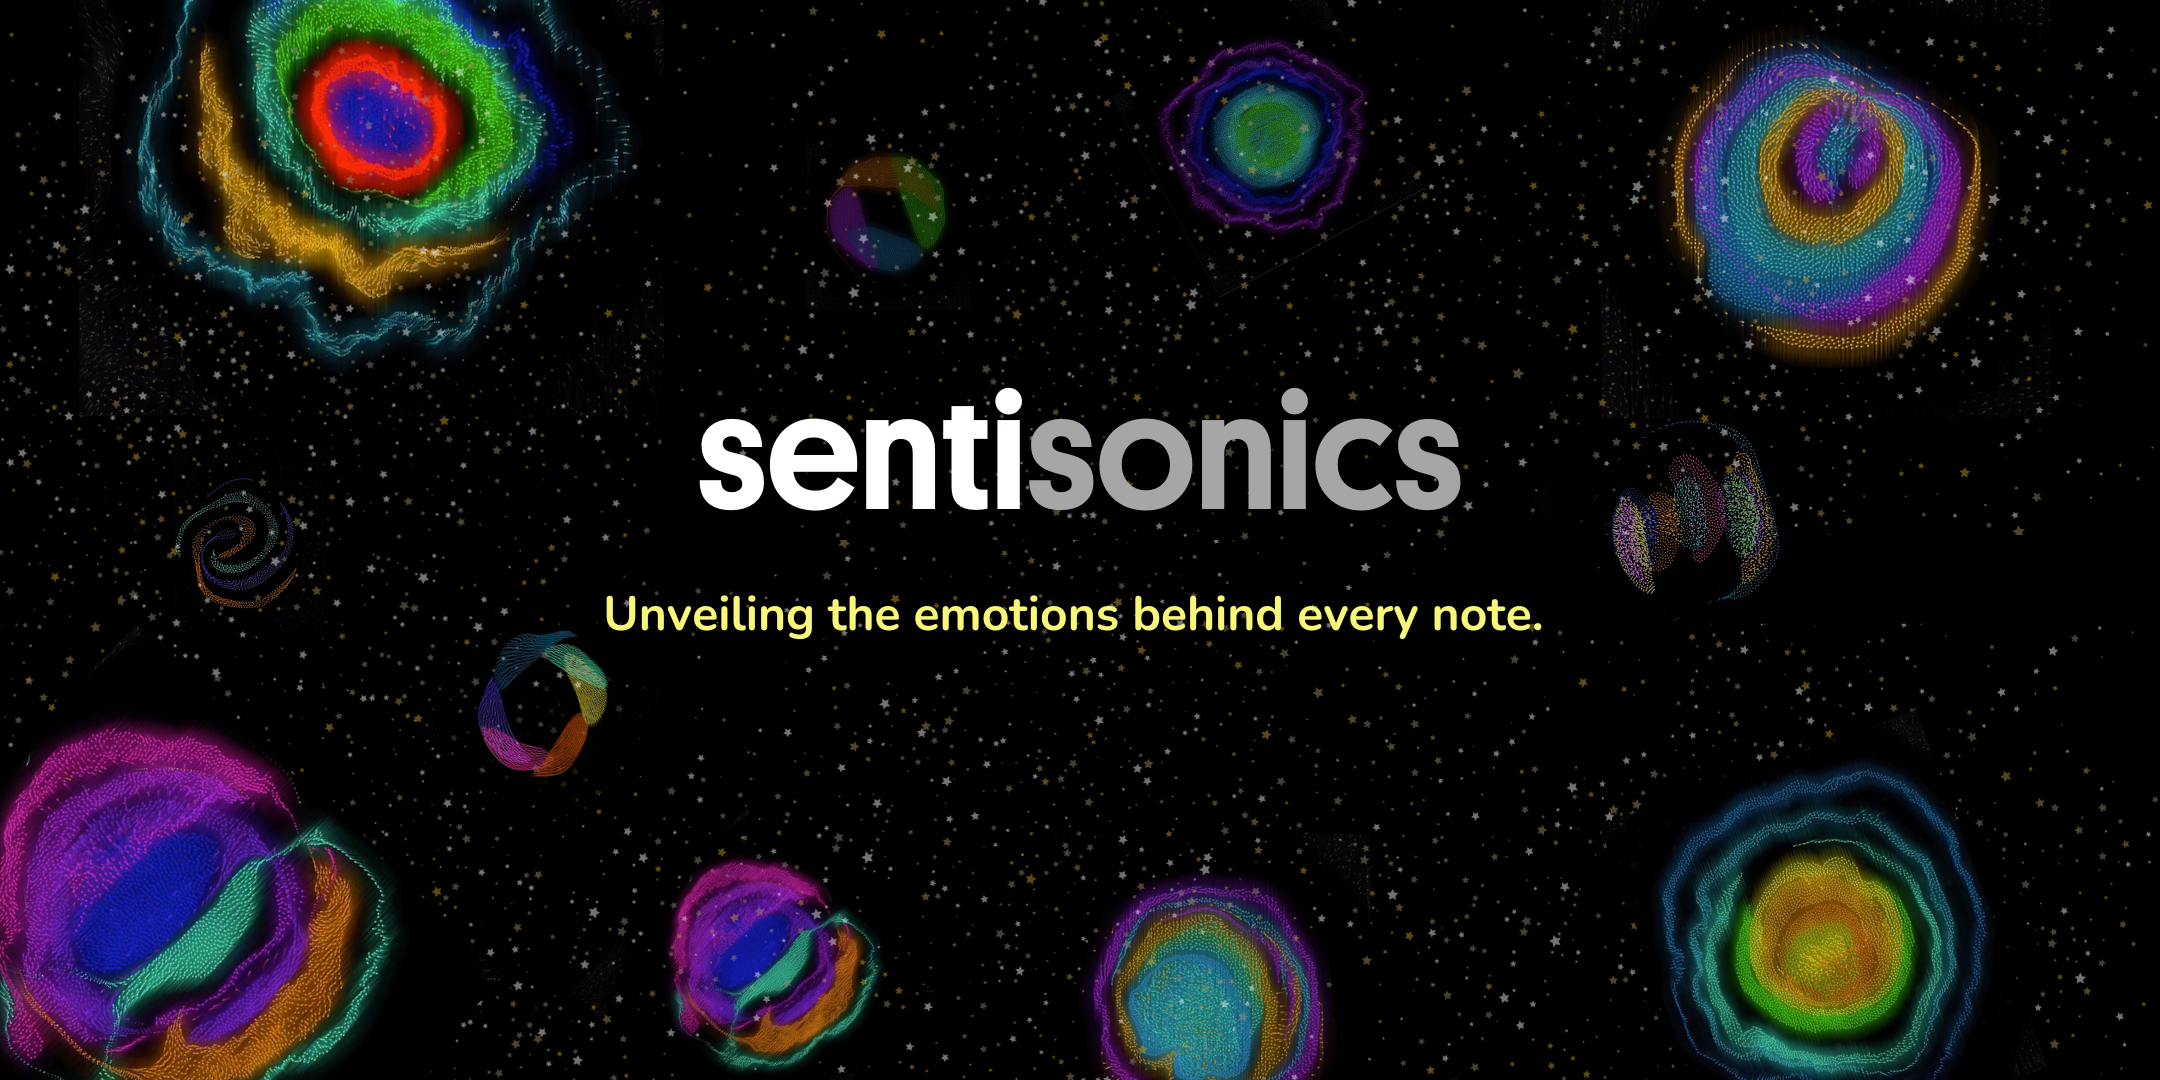 Sentisonics launch party – music meets emotion